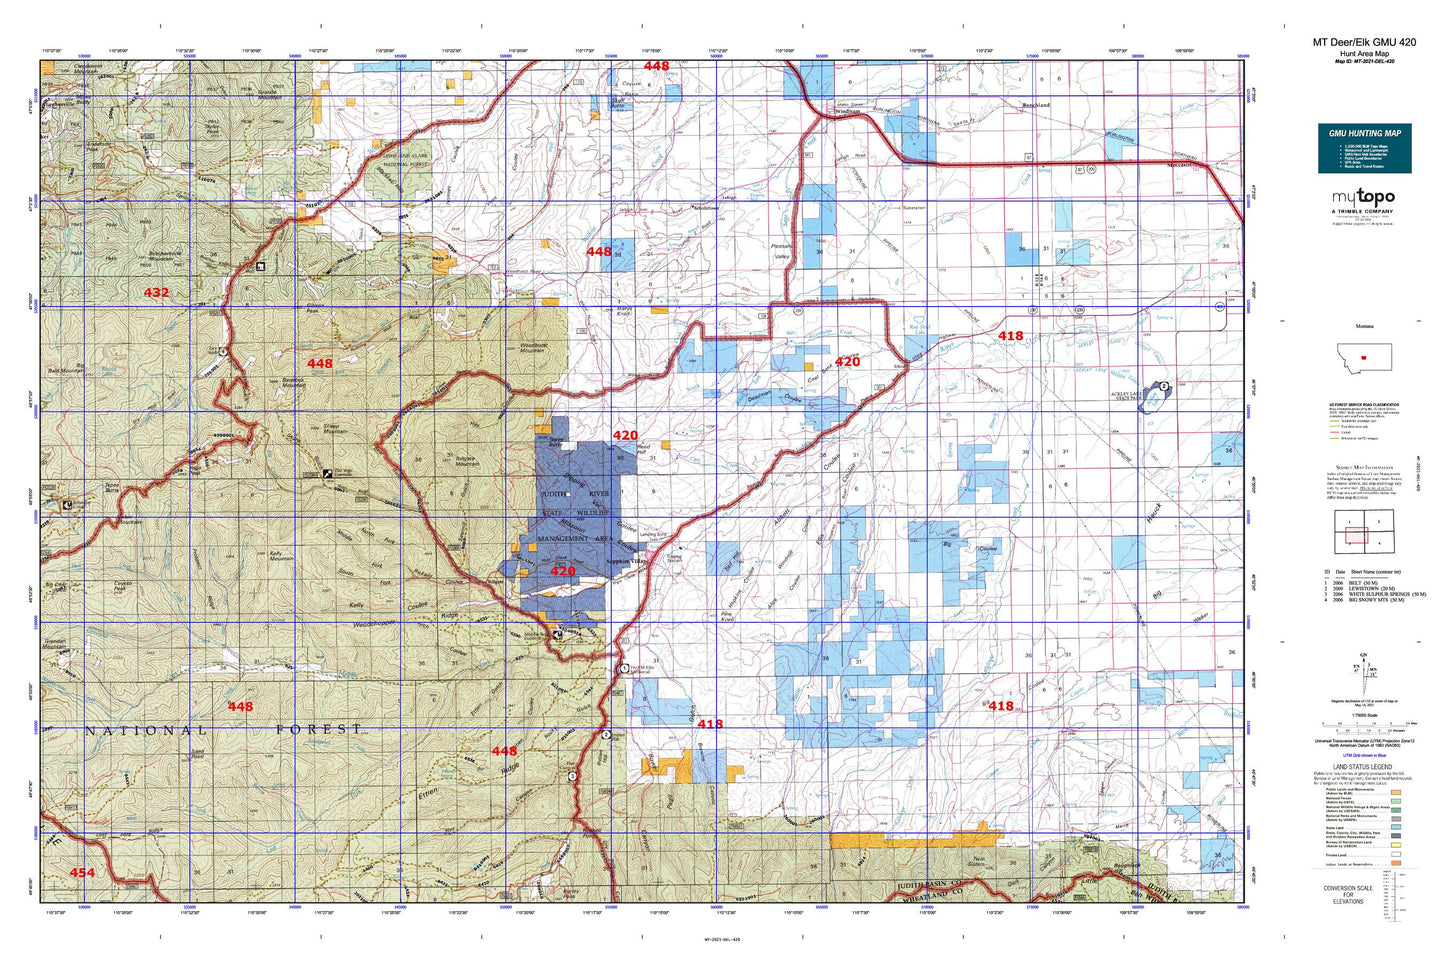 Montana Deer/Elk GMU 420 Map Image